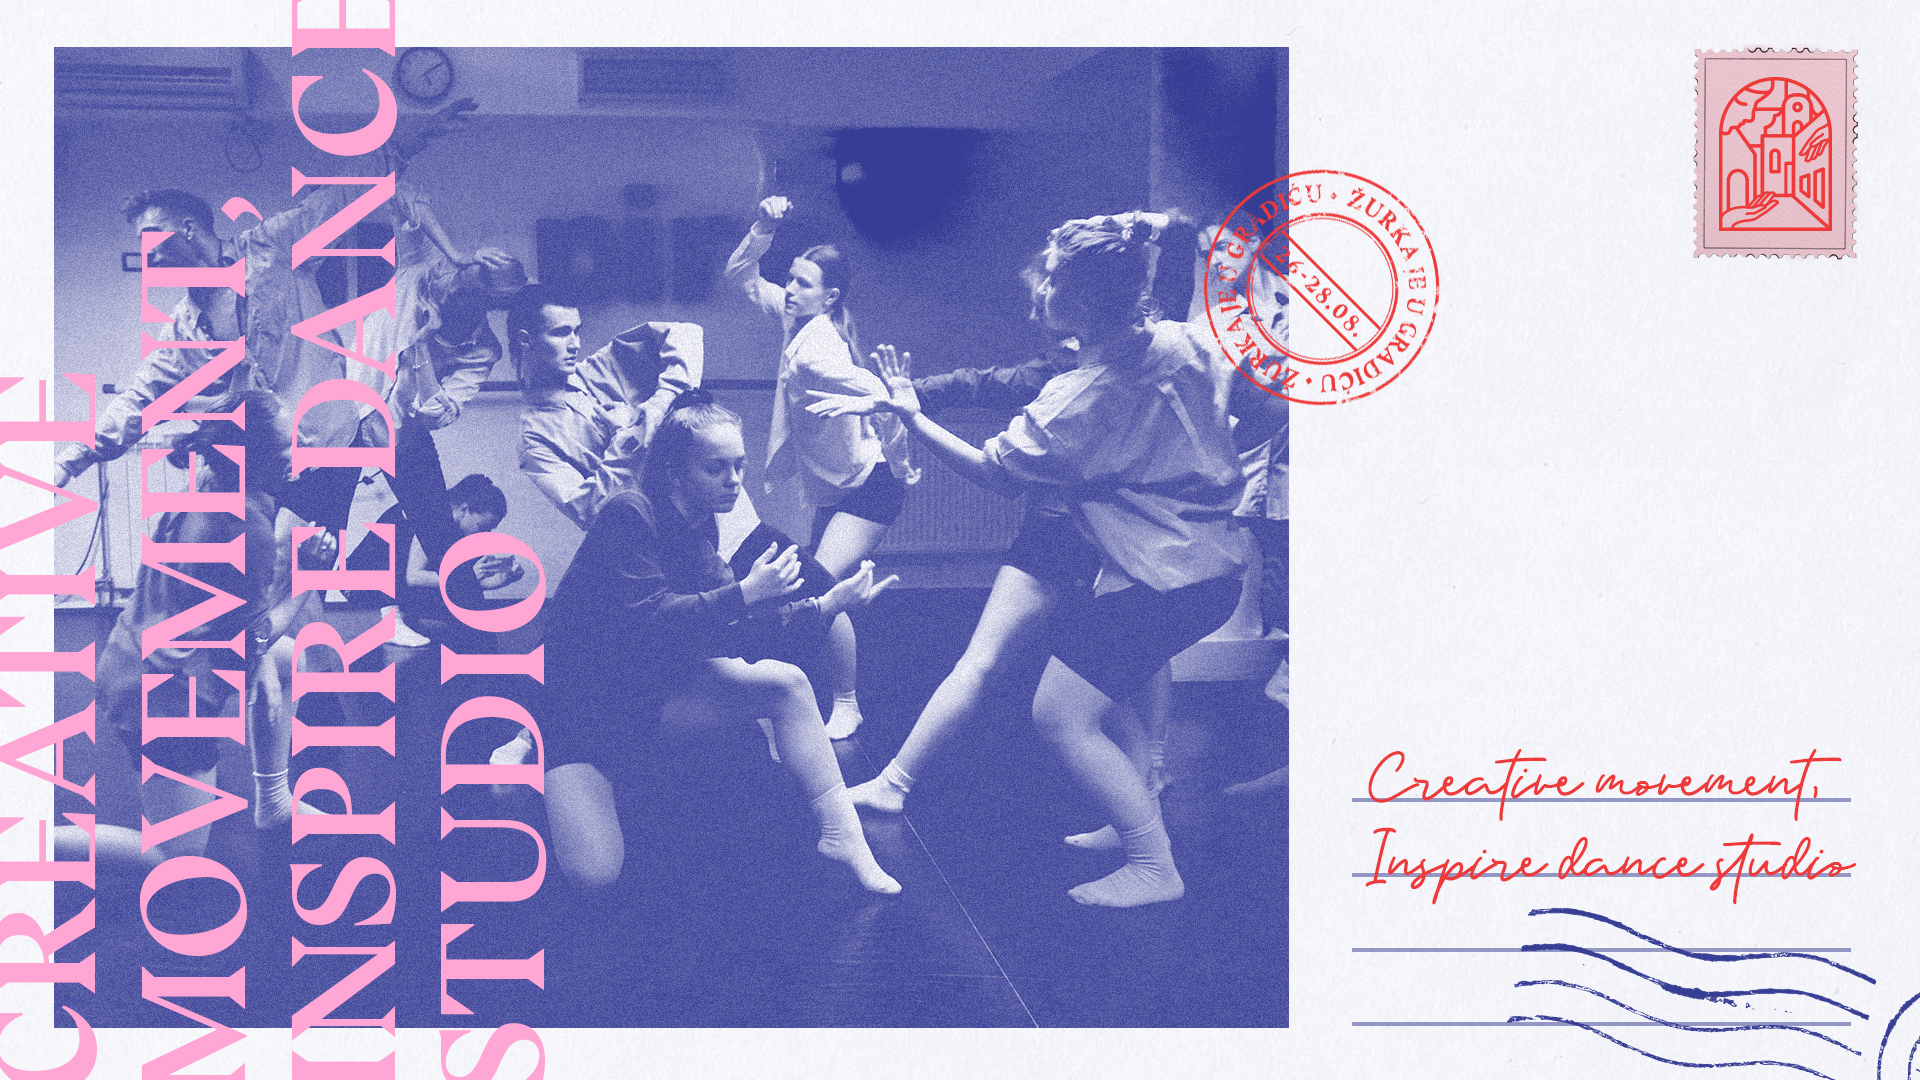 Creative movement – Inspire Concept Dance studio